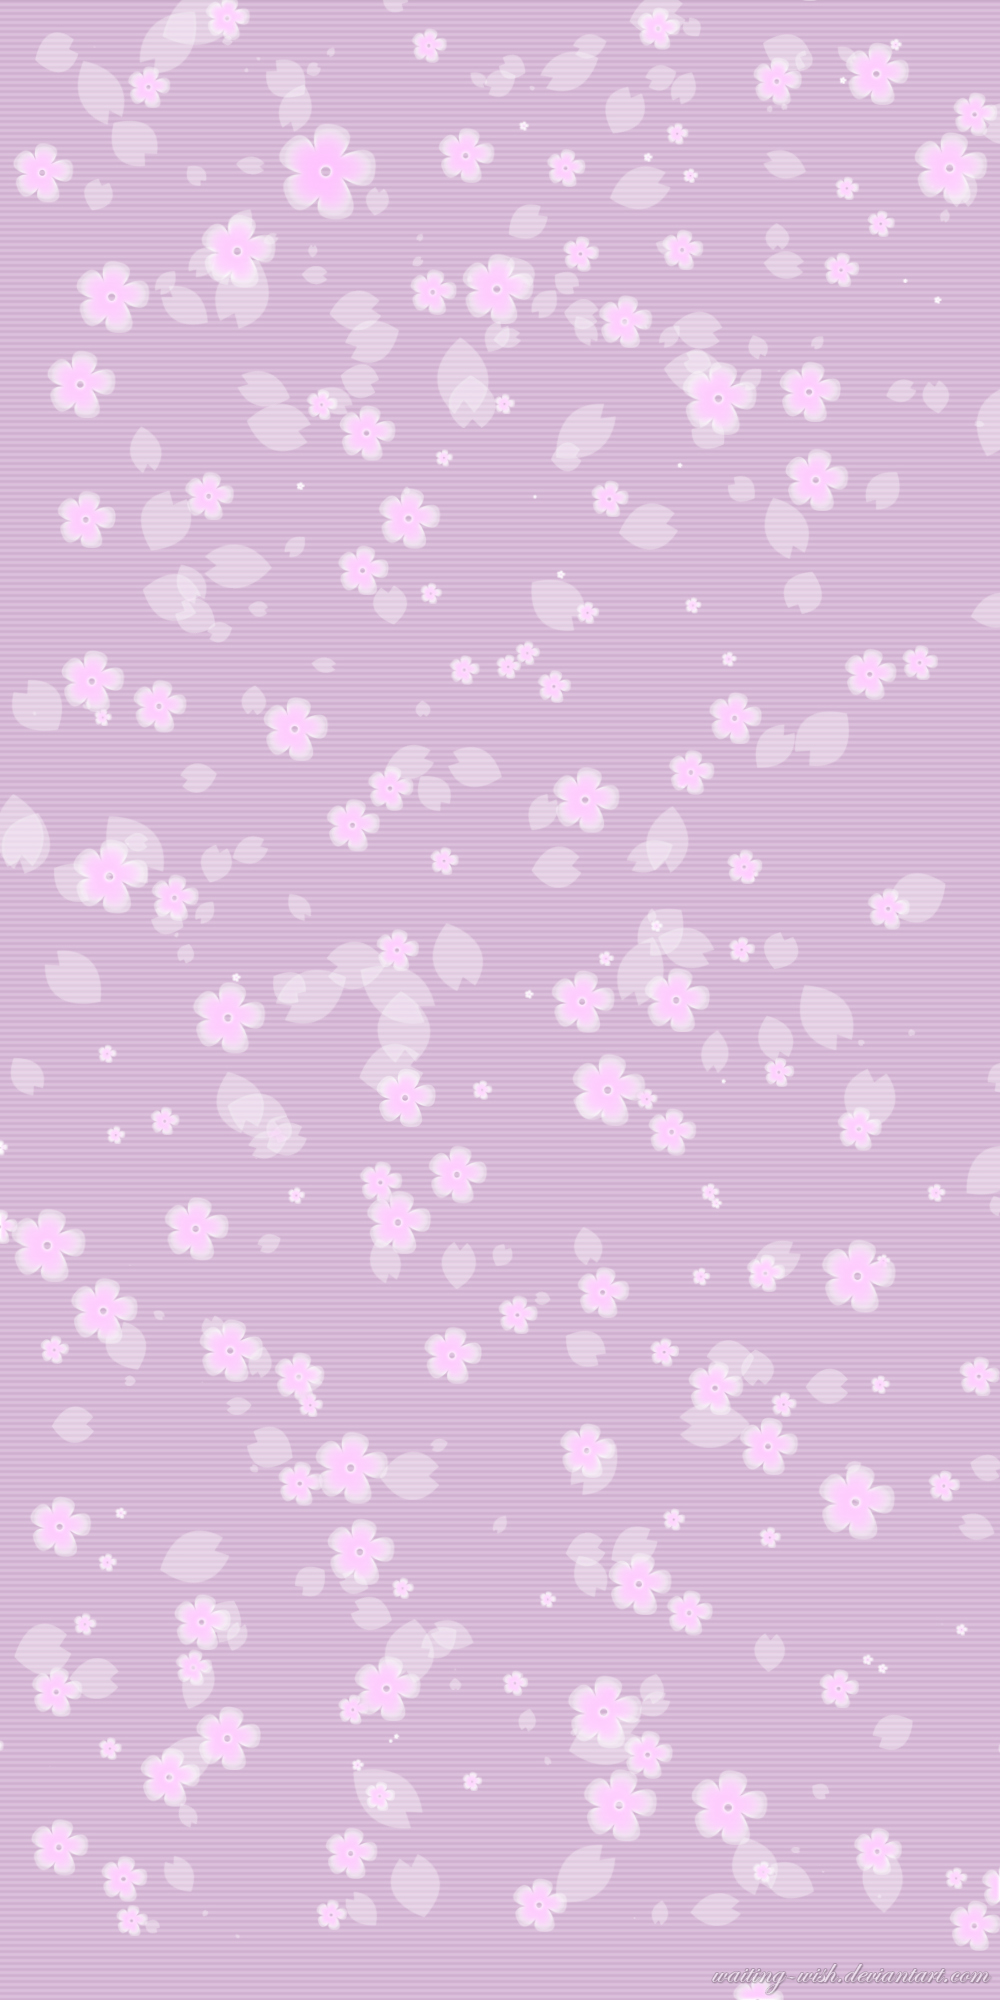 Lilac Sakura Background by Waiting Wish on